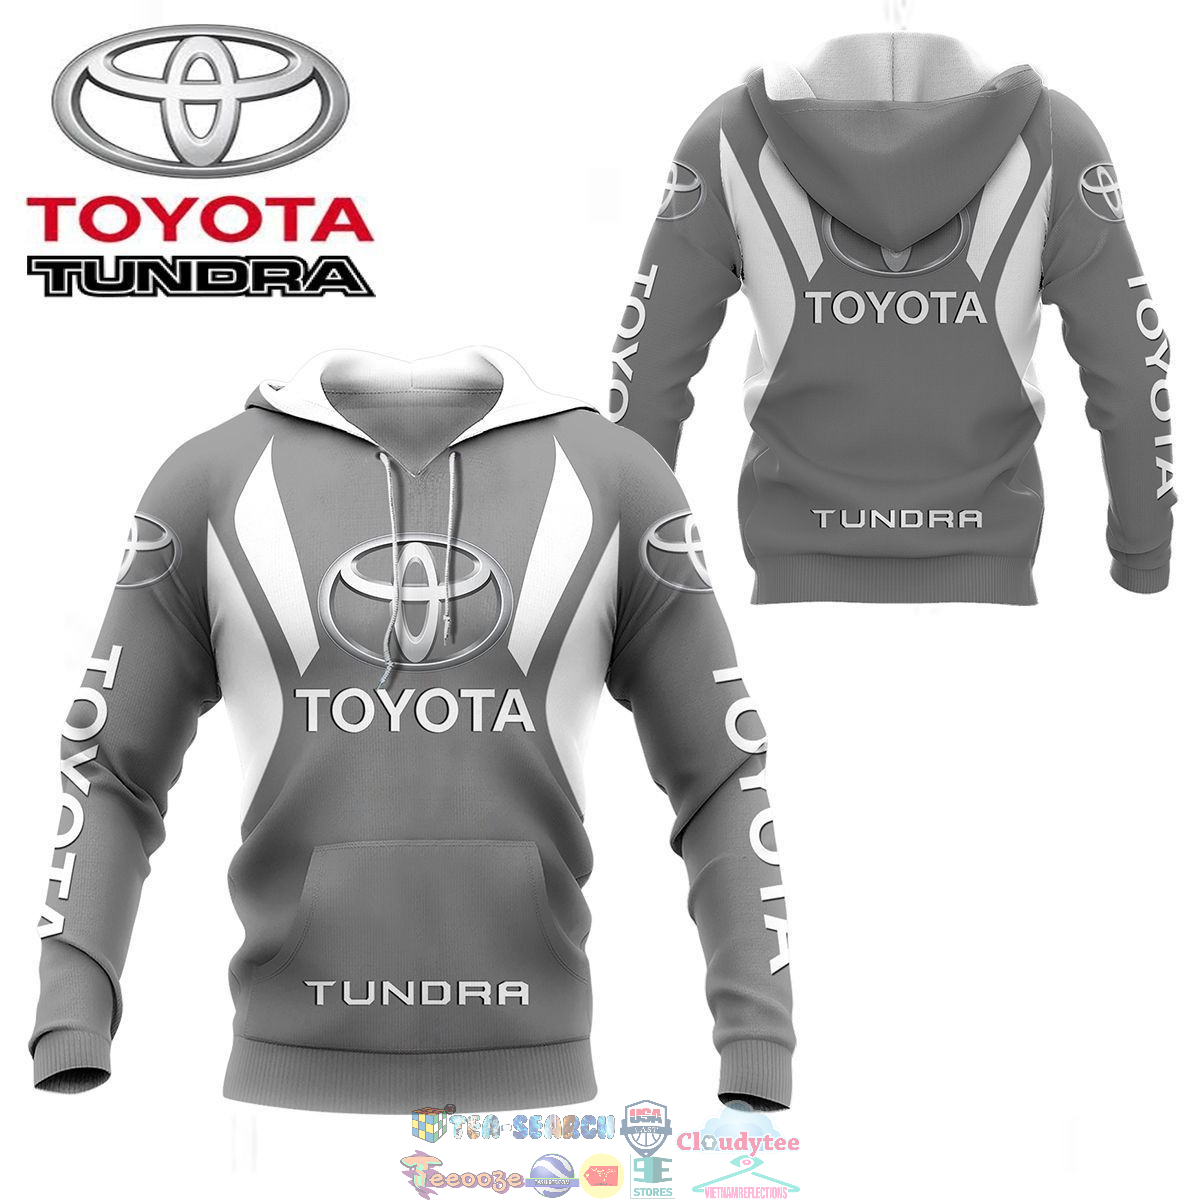 Toyota Tundra ver 15 3D hoodie and t-shirt – Saleoff